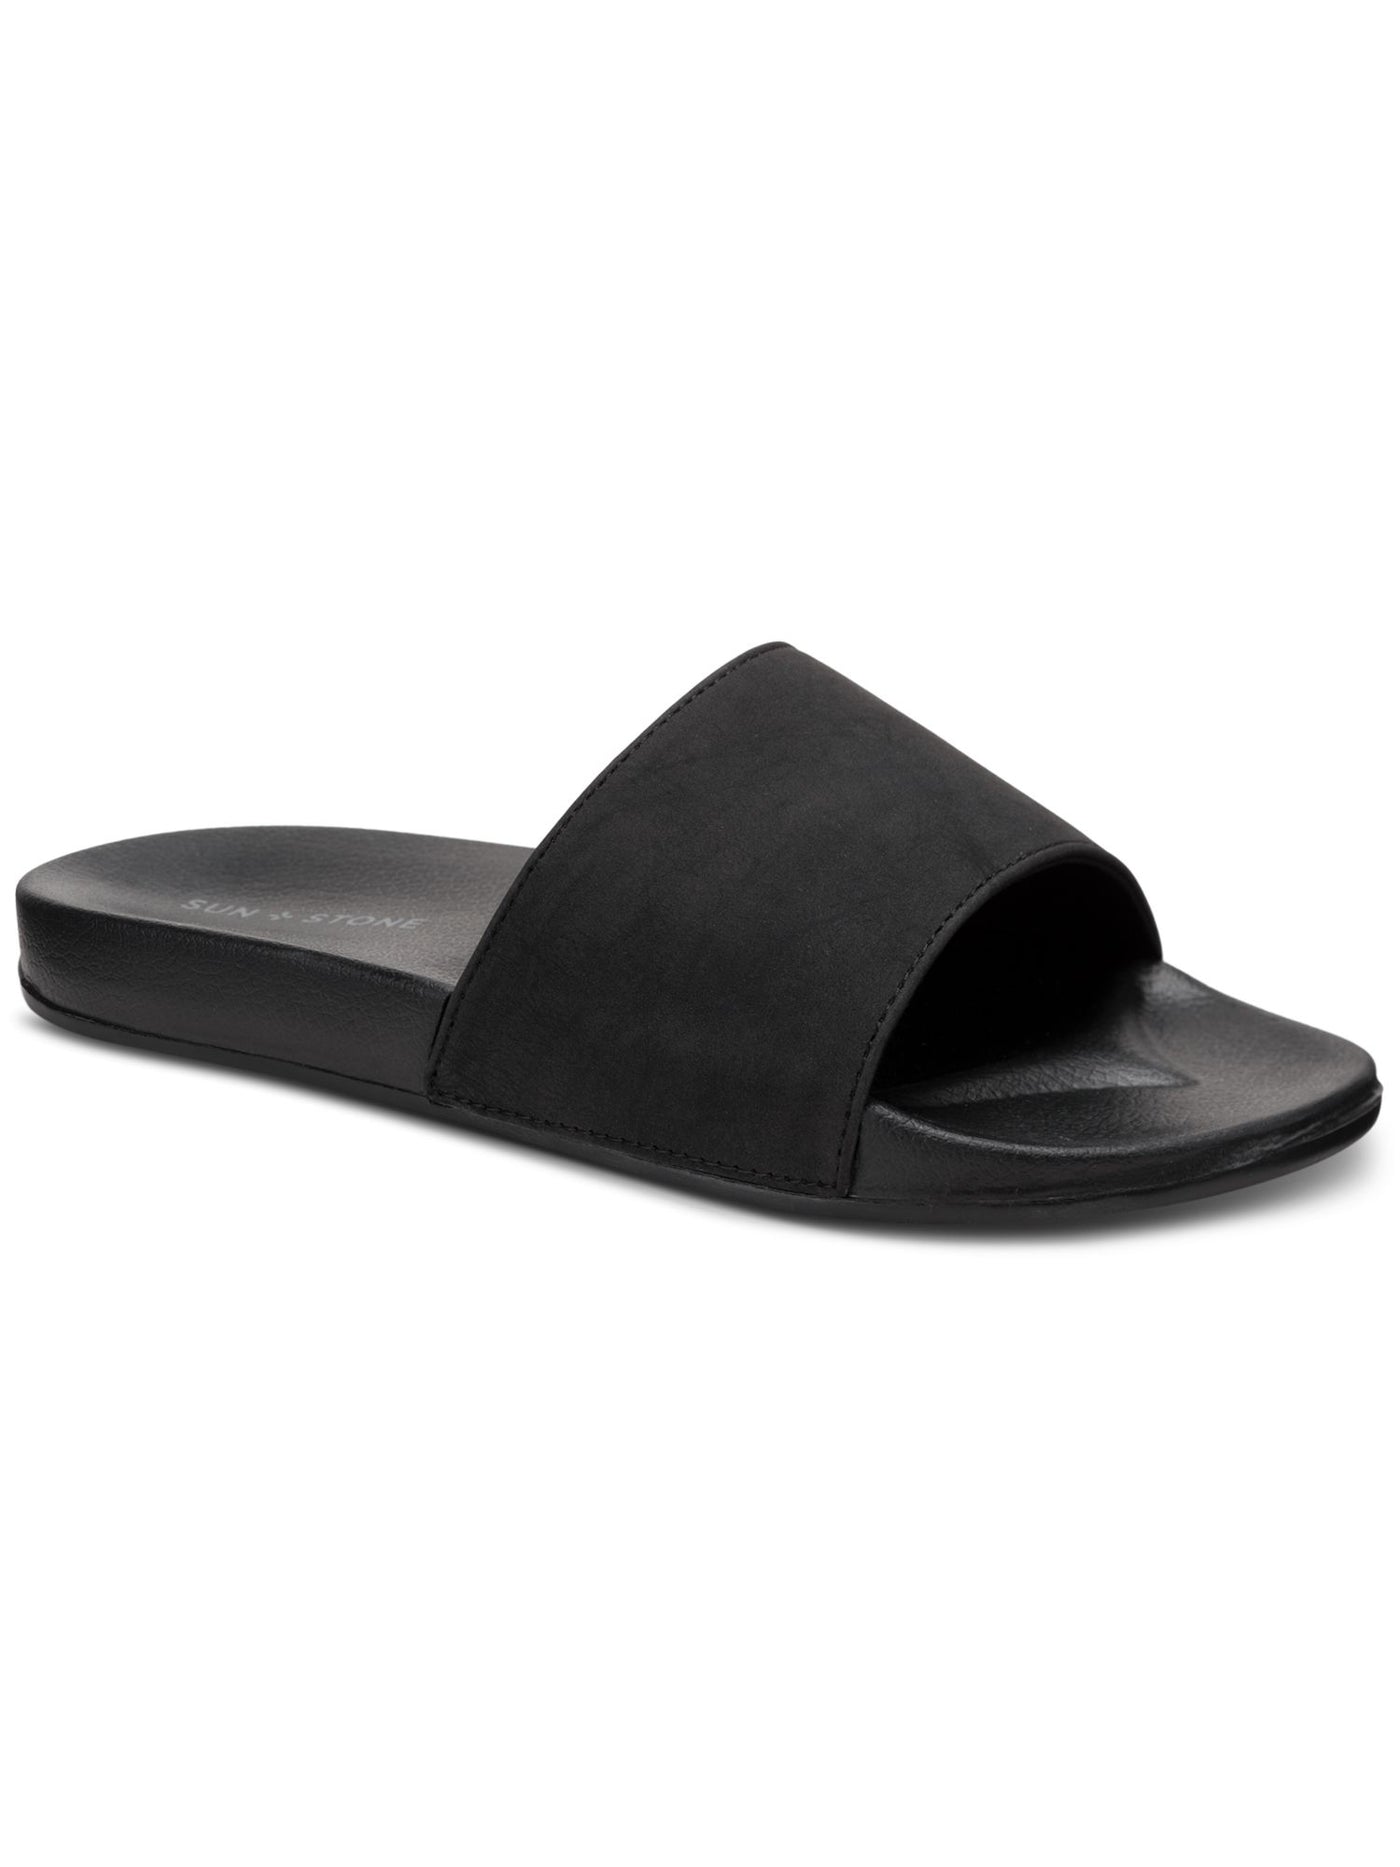 SUN STONE Mens Black Contoured Footbed Padded Ian Round Toe Slip On Slide Sandals Shoes 12